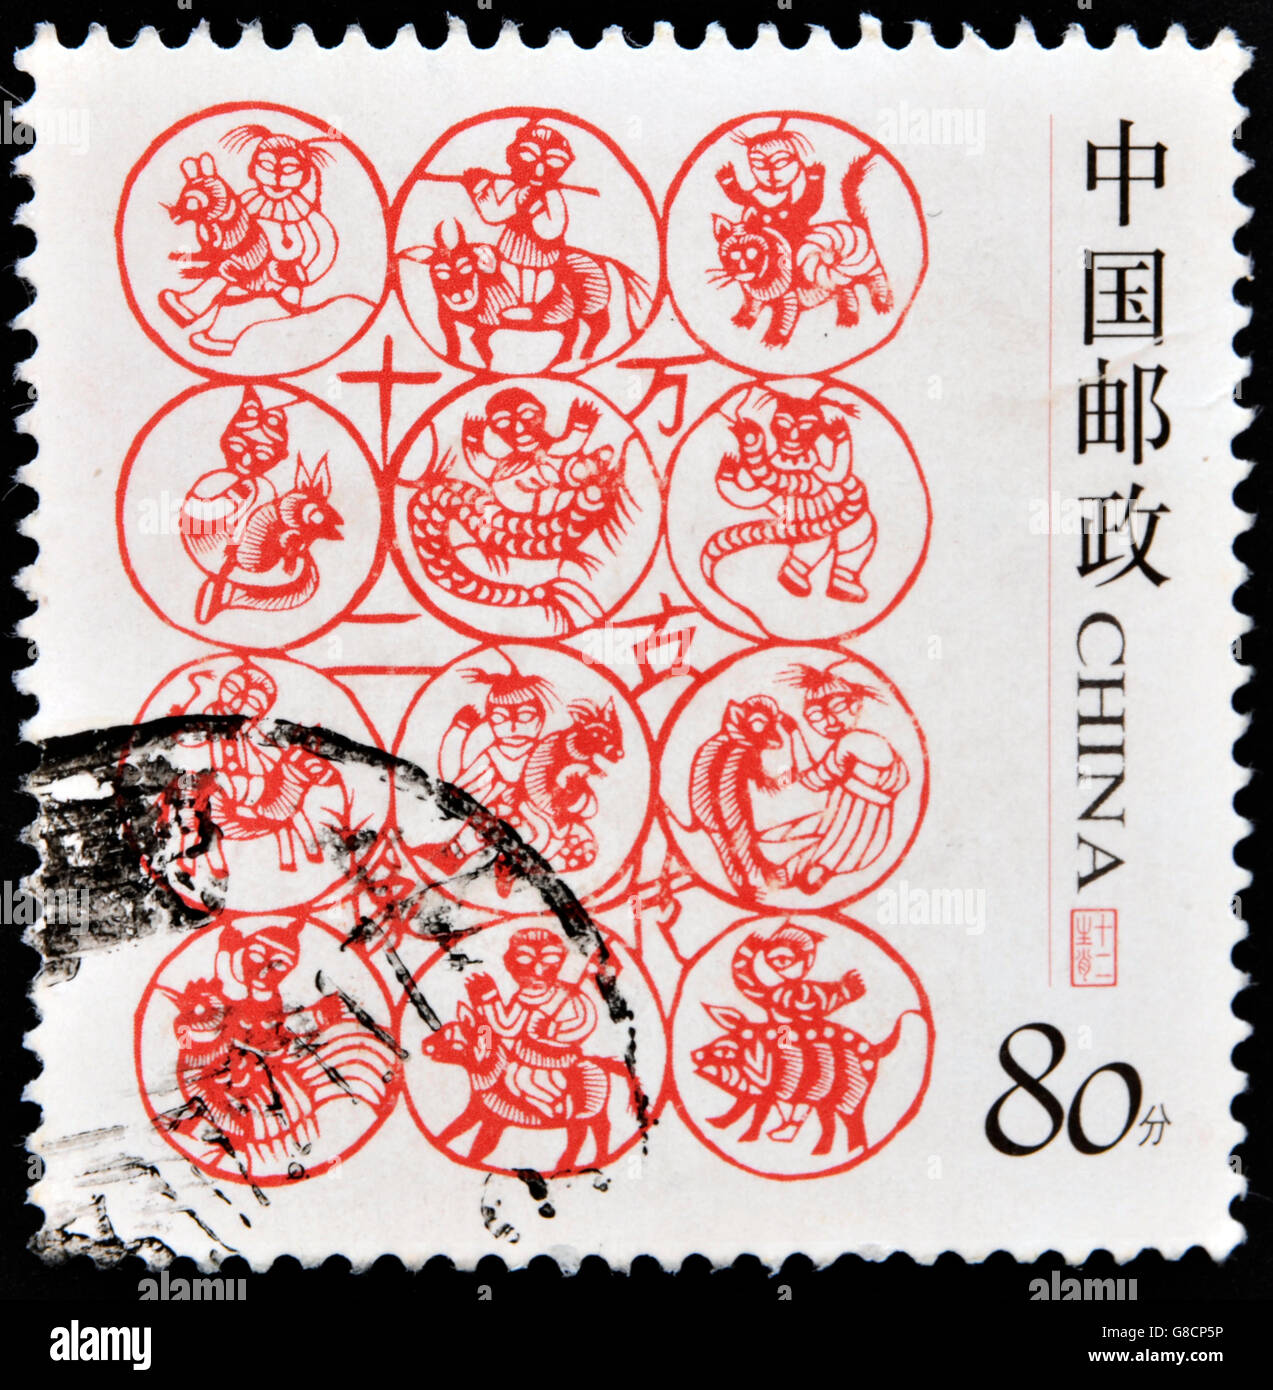 CHINA - CIRCA 2005: A stamp printed in China shows Chinese zodiac signs,  circa 2005 Stock Photo - Alamy